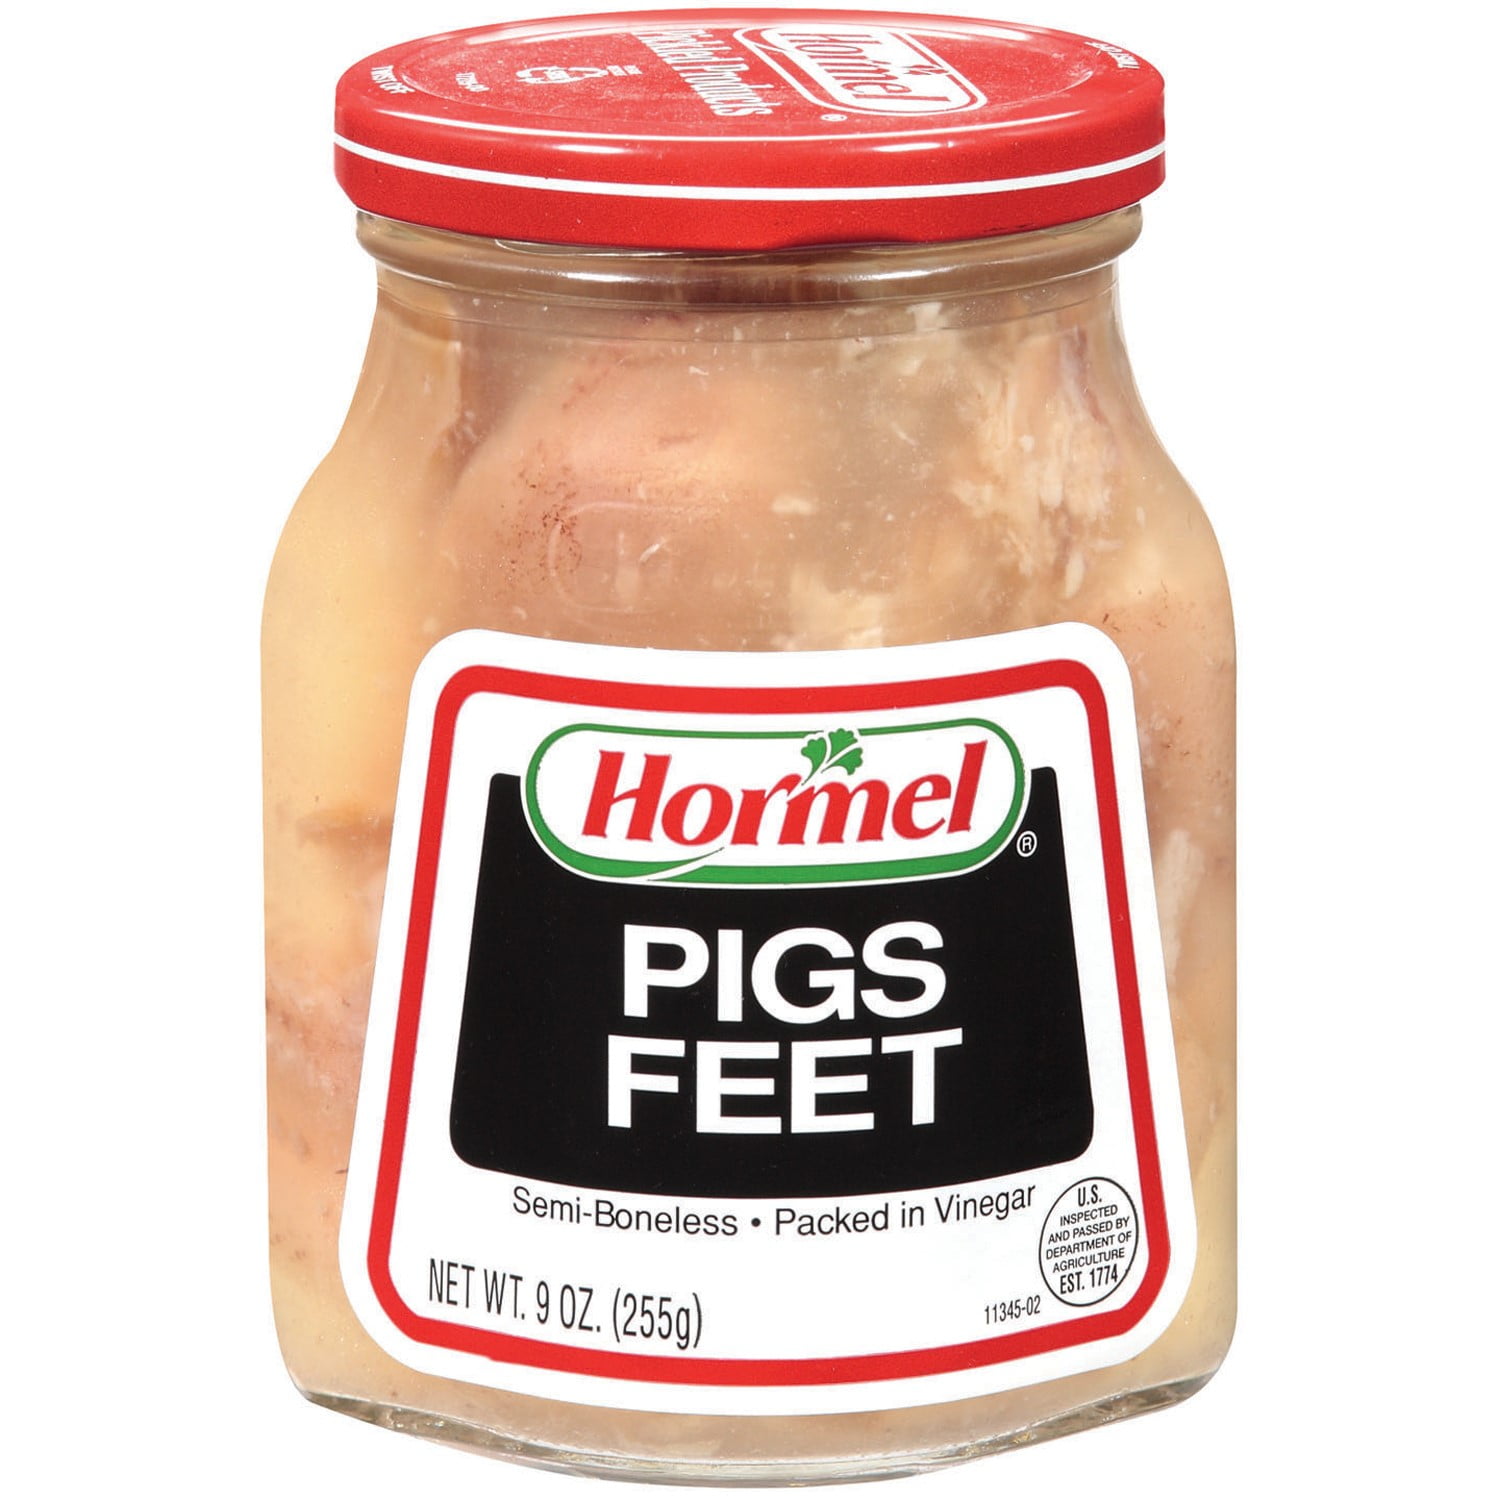 herb's pickled pig feet